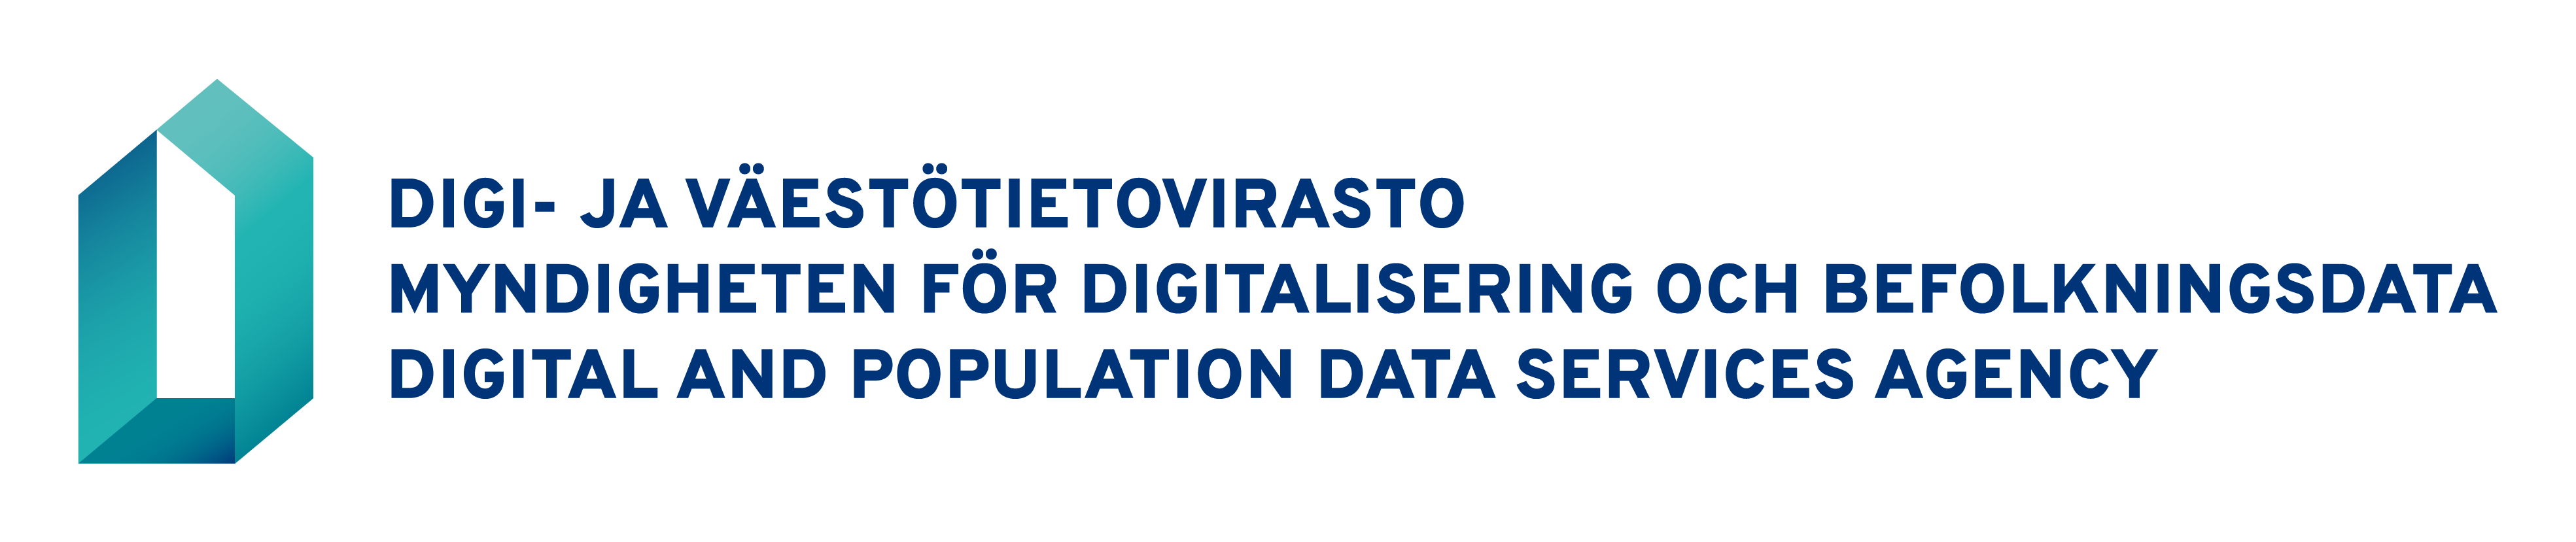 Digital and Population Data Services Agency’s three-language logo (Finnish-Swedish-English)